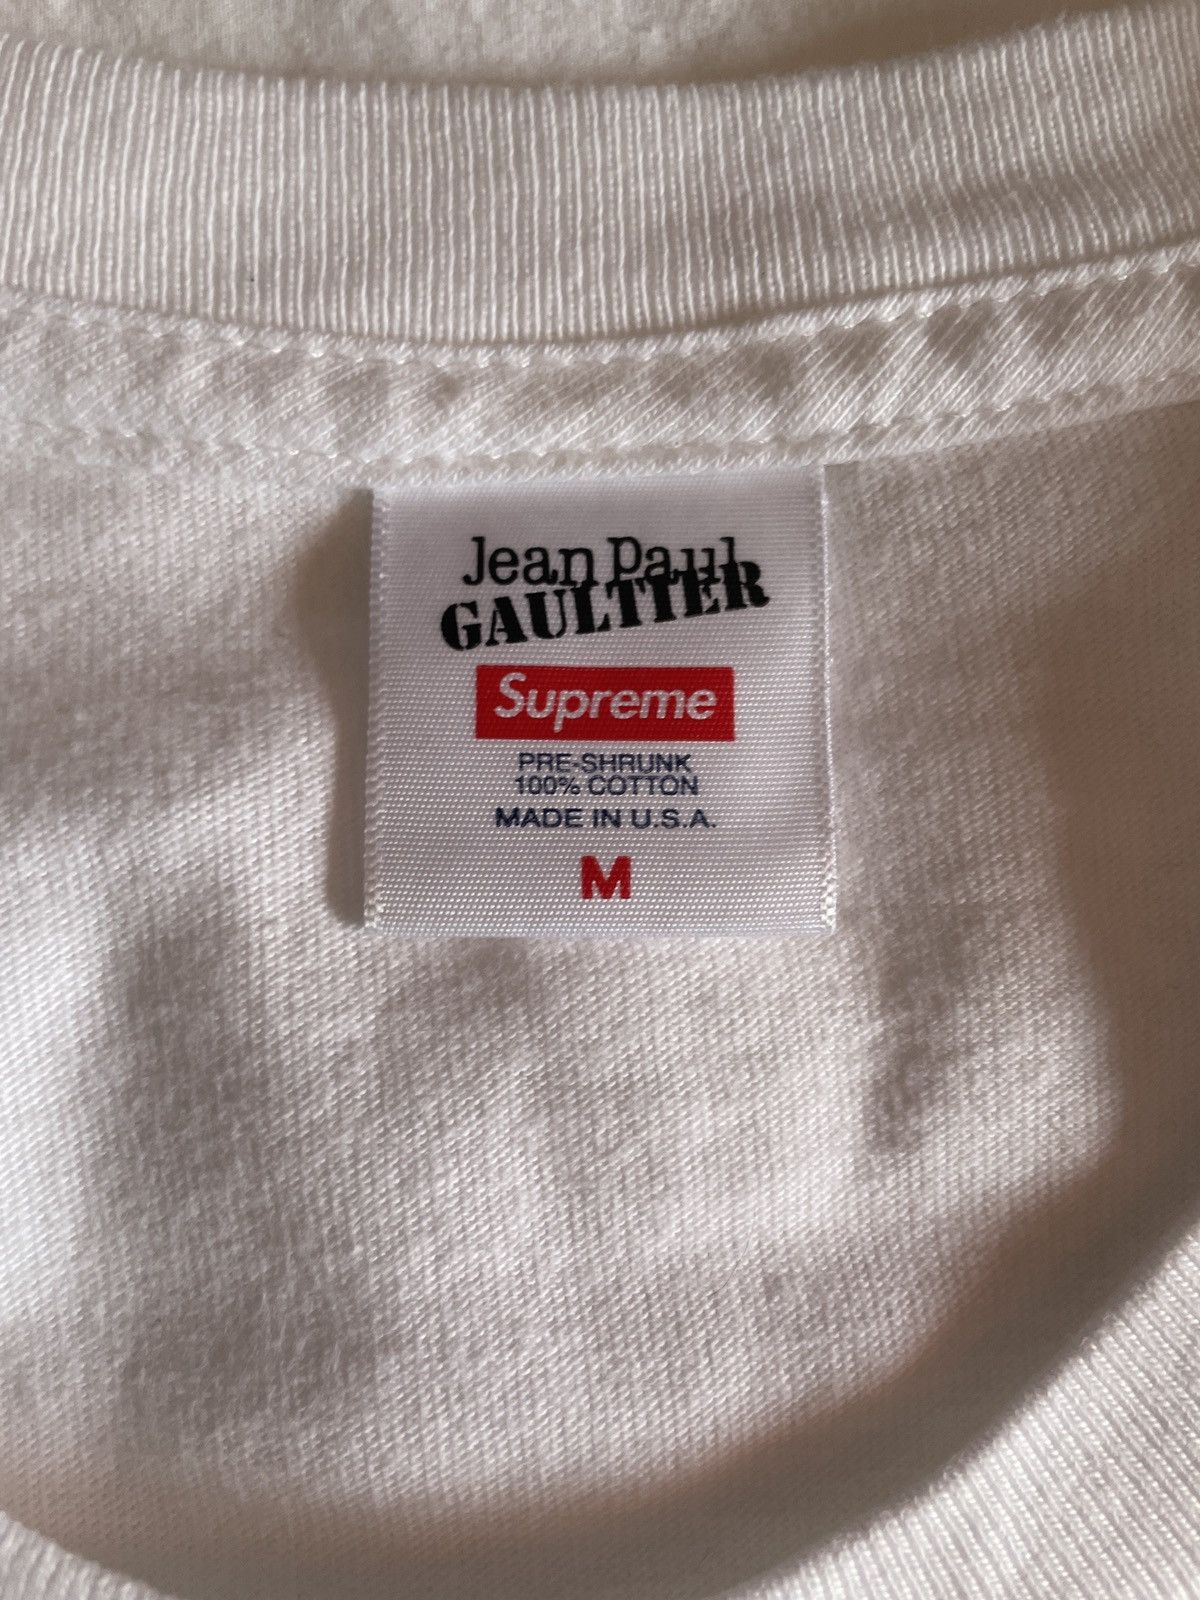 Supreme Supreme Jean Paul Gaultier Tee White Medium | Grailed